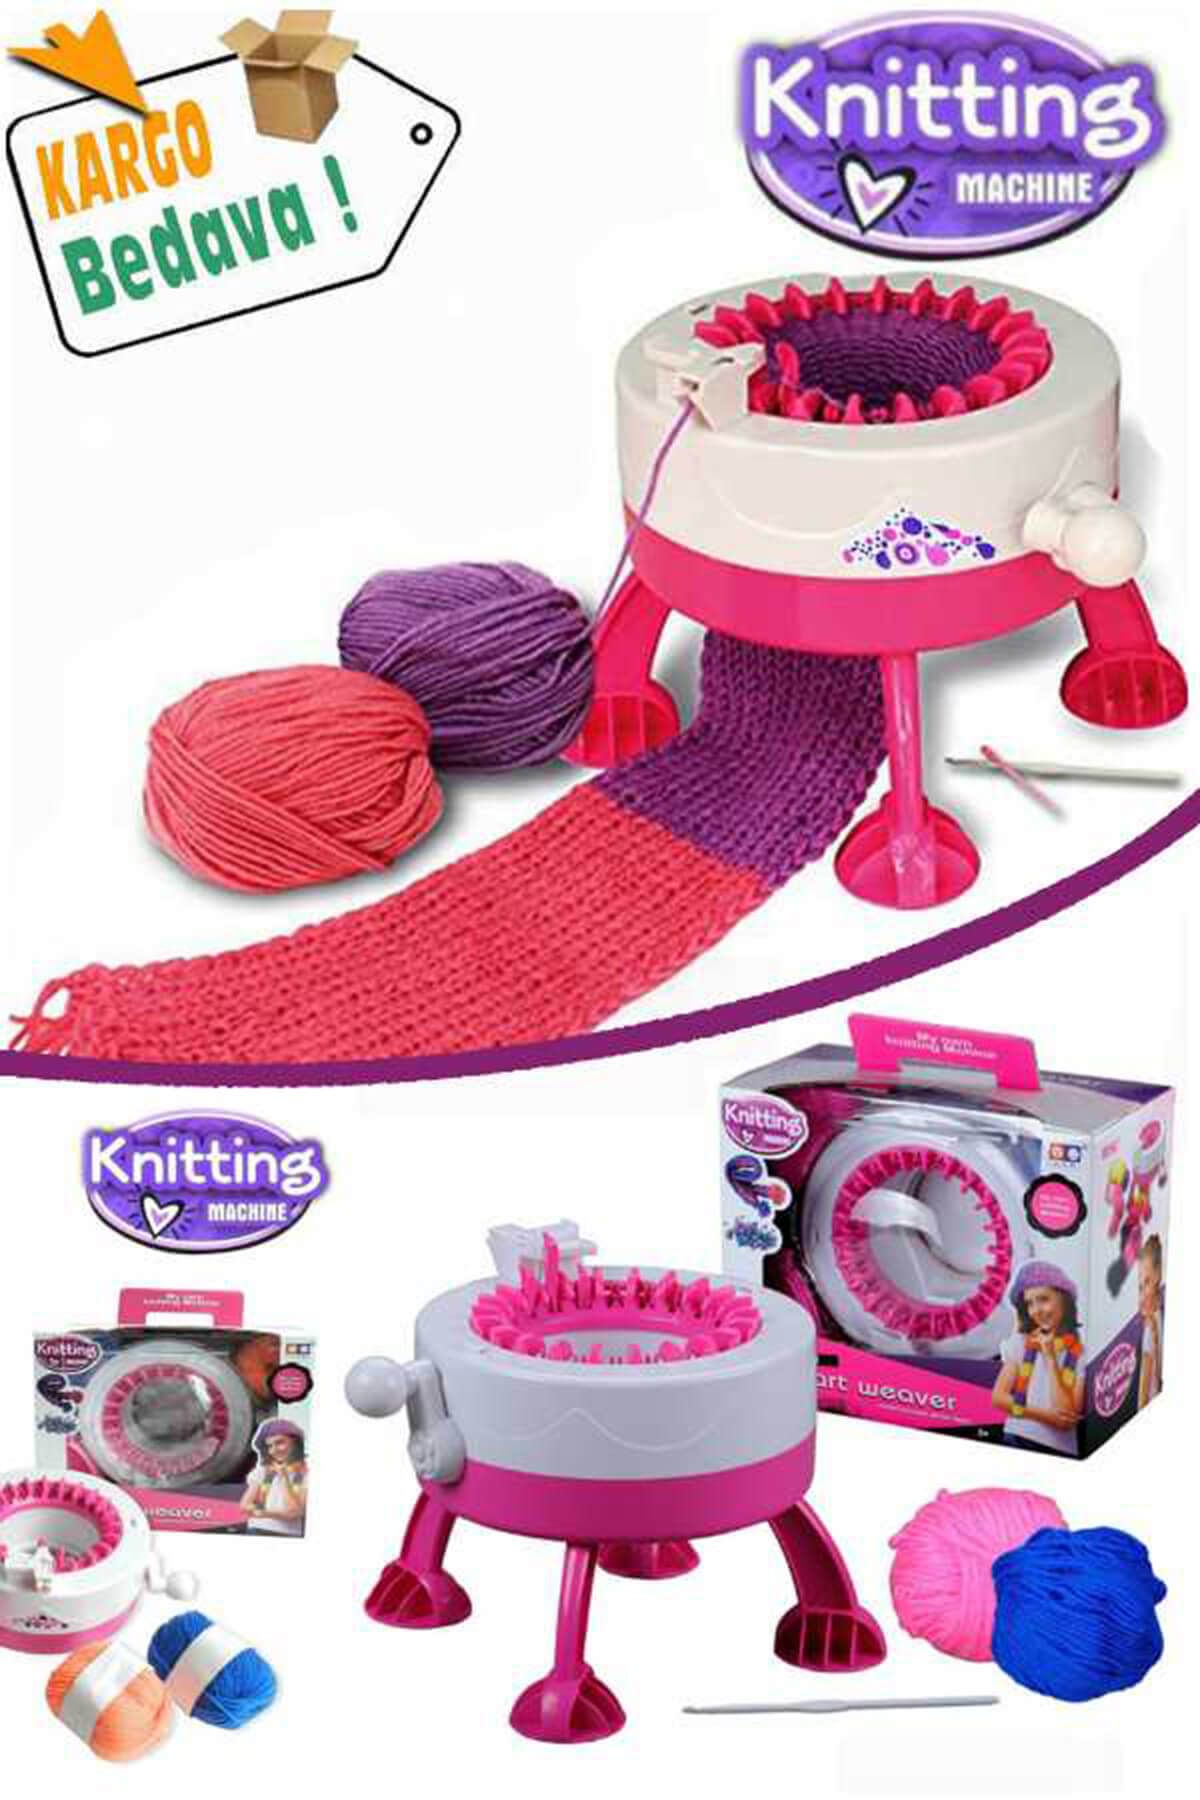 keyfi sepet smart weaver knitting orgu makinesi fiyati yorumlari trendyol